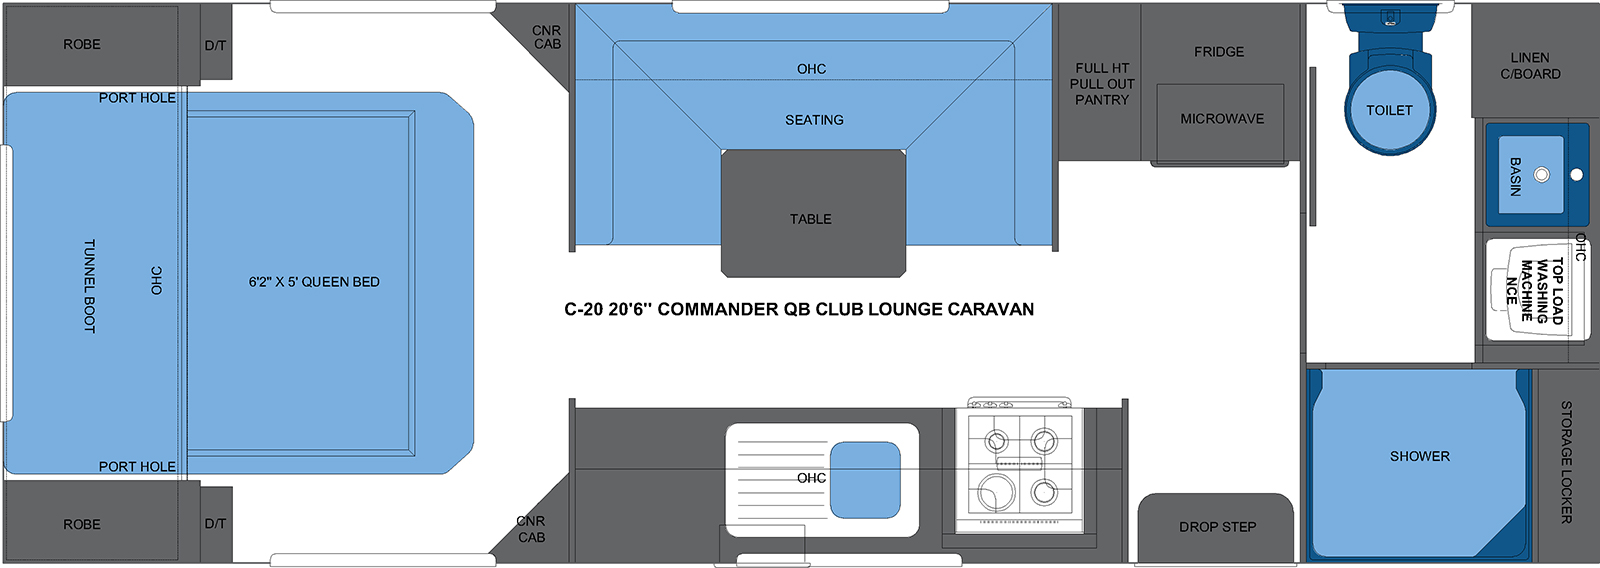 C-20 20'6 COMMANDER QB CLUB LOUNGE CARAVAN